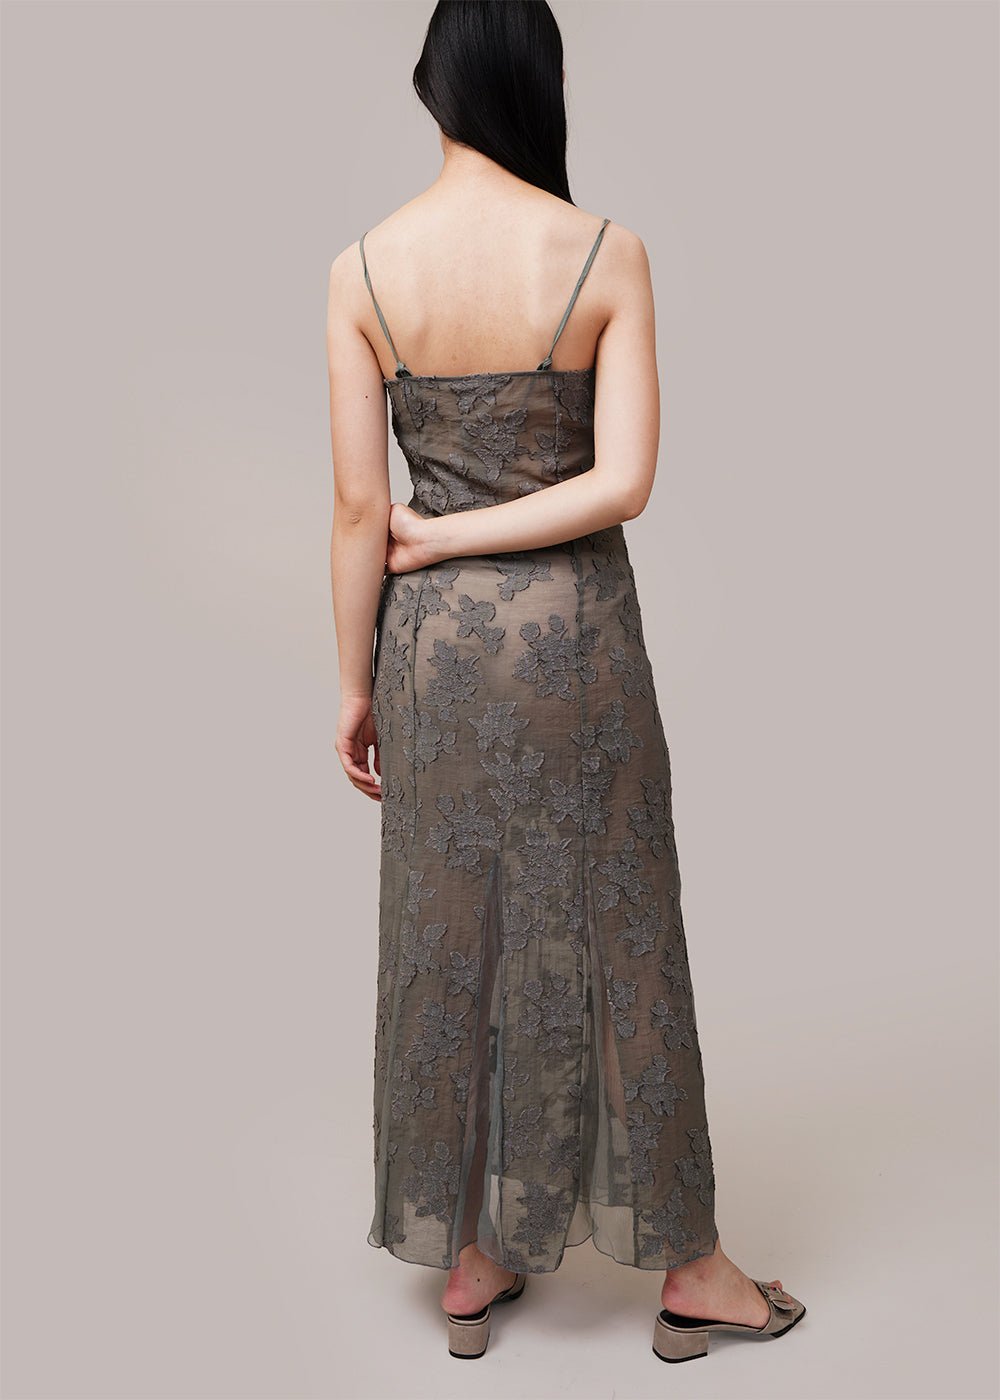 Paloma Wool Grey Maddox Dress - New Classics Studios Sustainable Ethical Fashion Canada